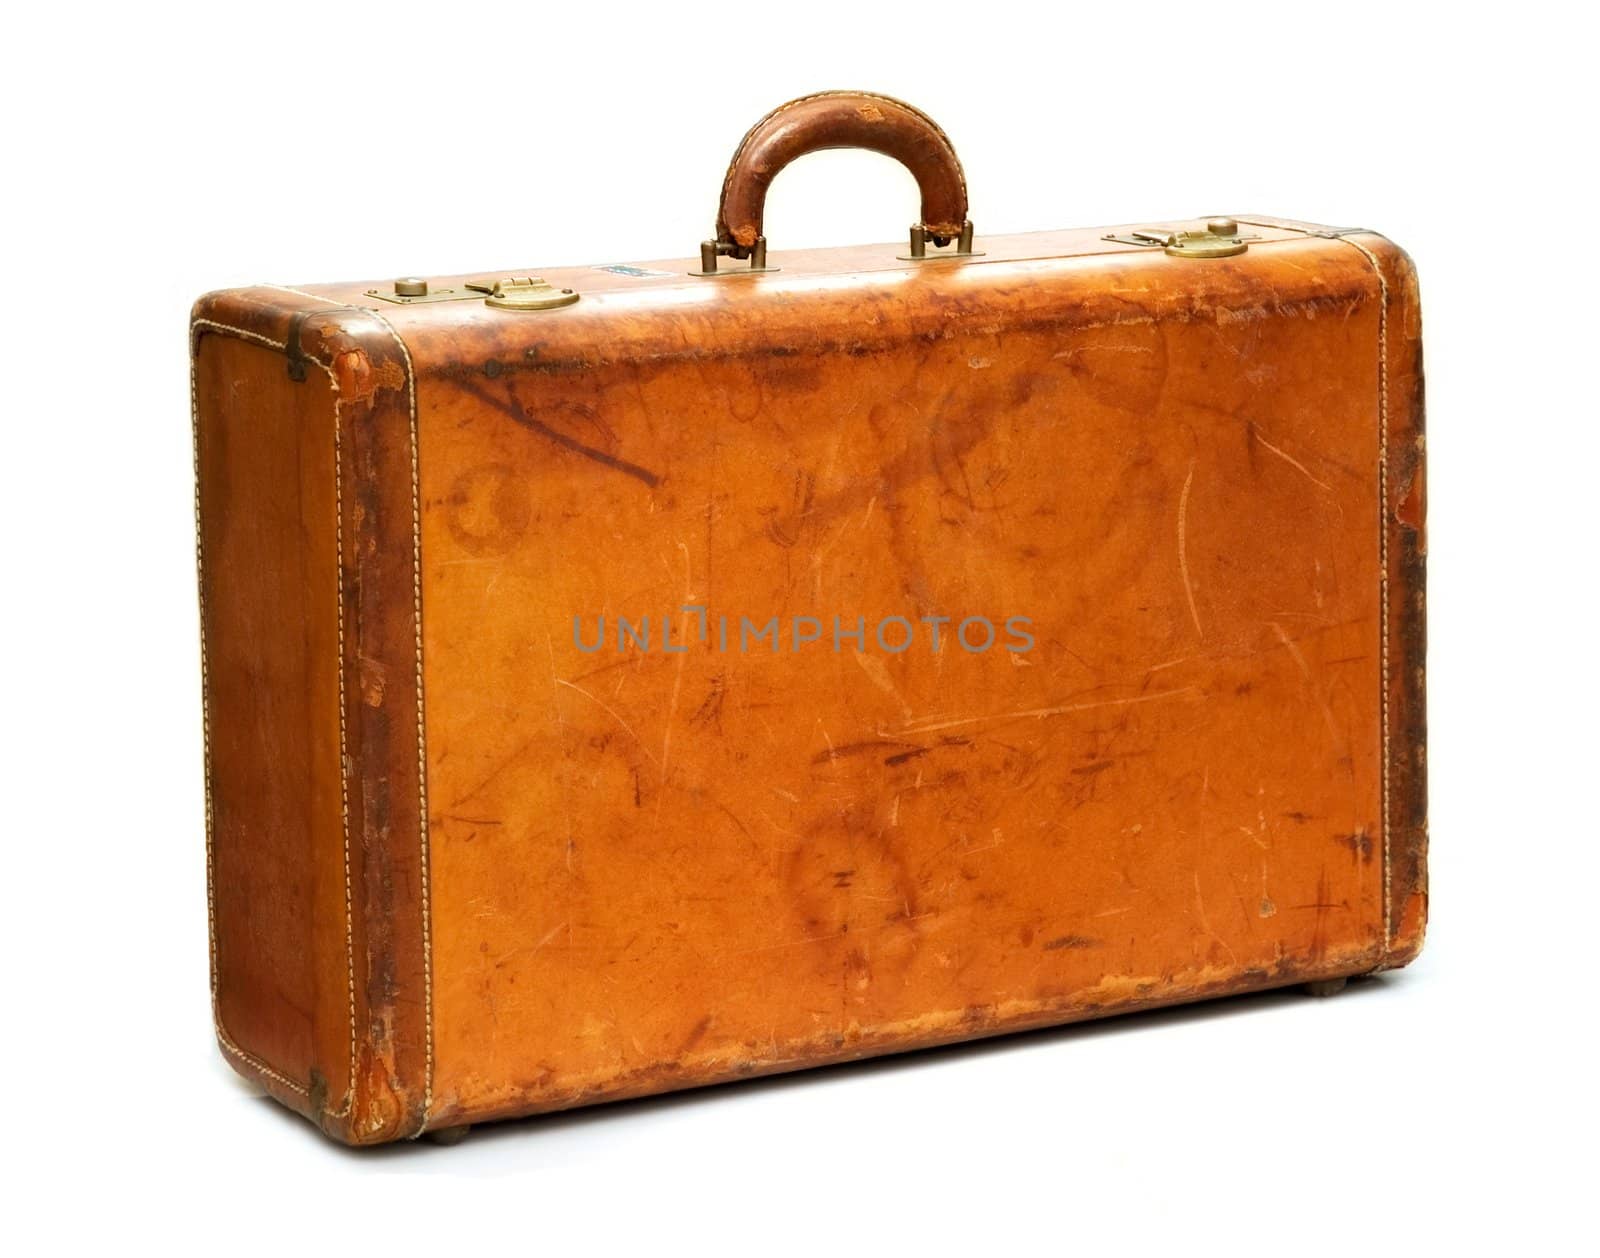 Well-traveled vintage suitcase isolated on white